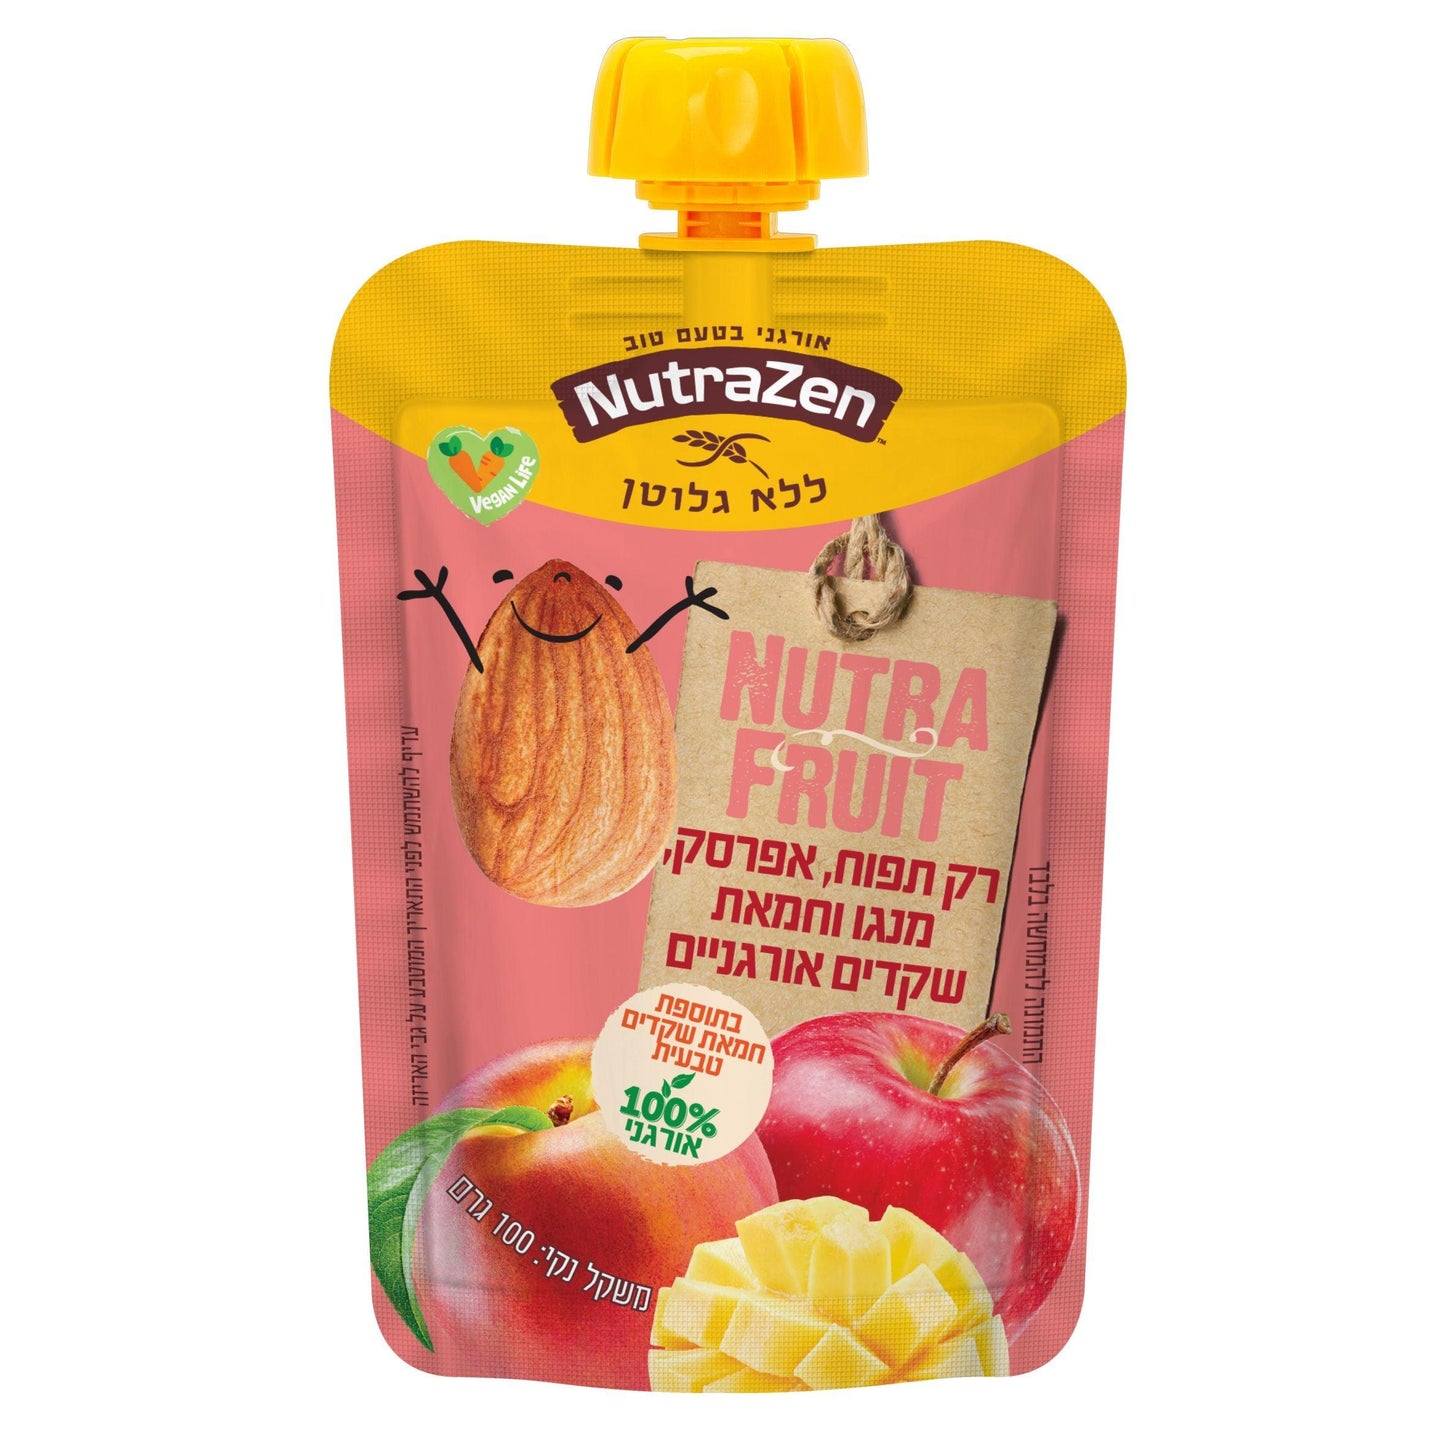 Nutra Fruit - מחית אורגנית תפוחי עץ, אפרסק, מנגו וחמאת שקדים | נוטרה זן - 6 יחידות - NutraZen - פריקפוא